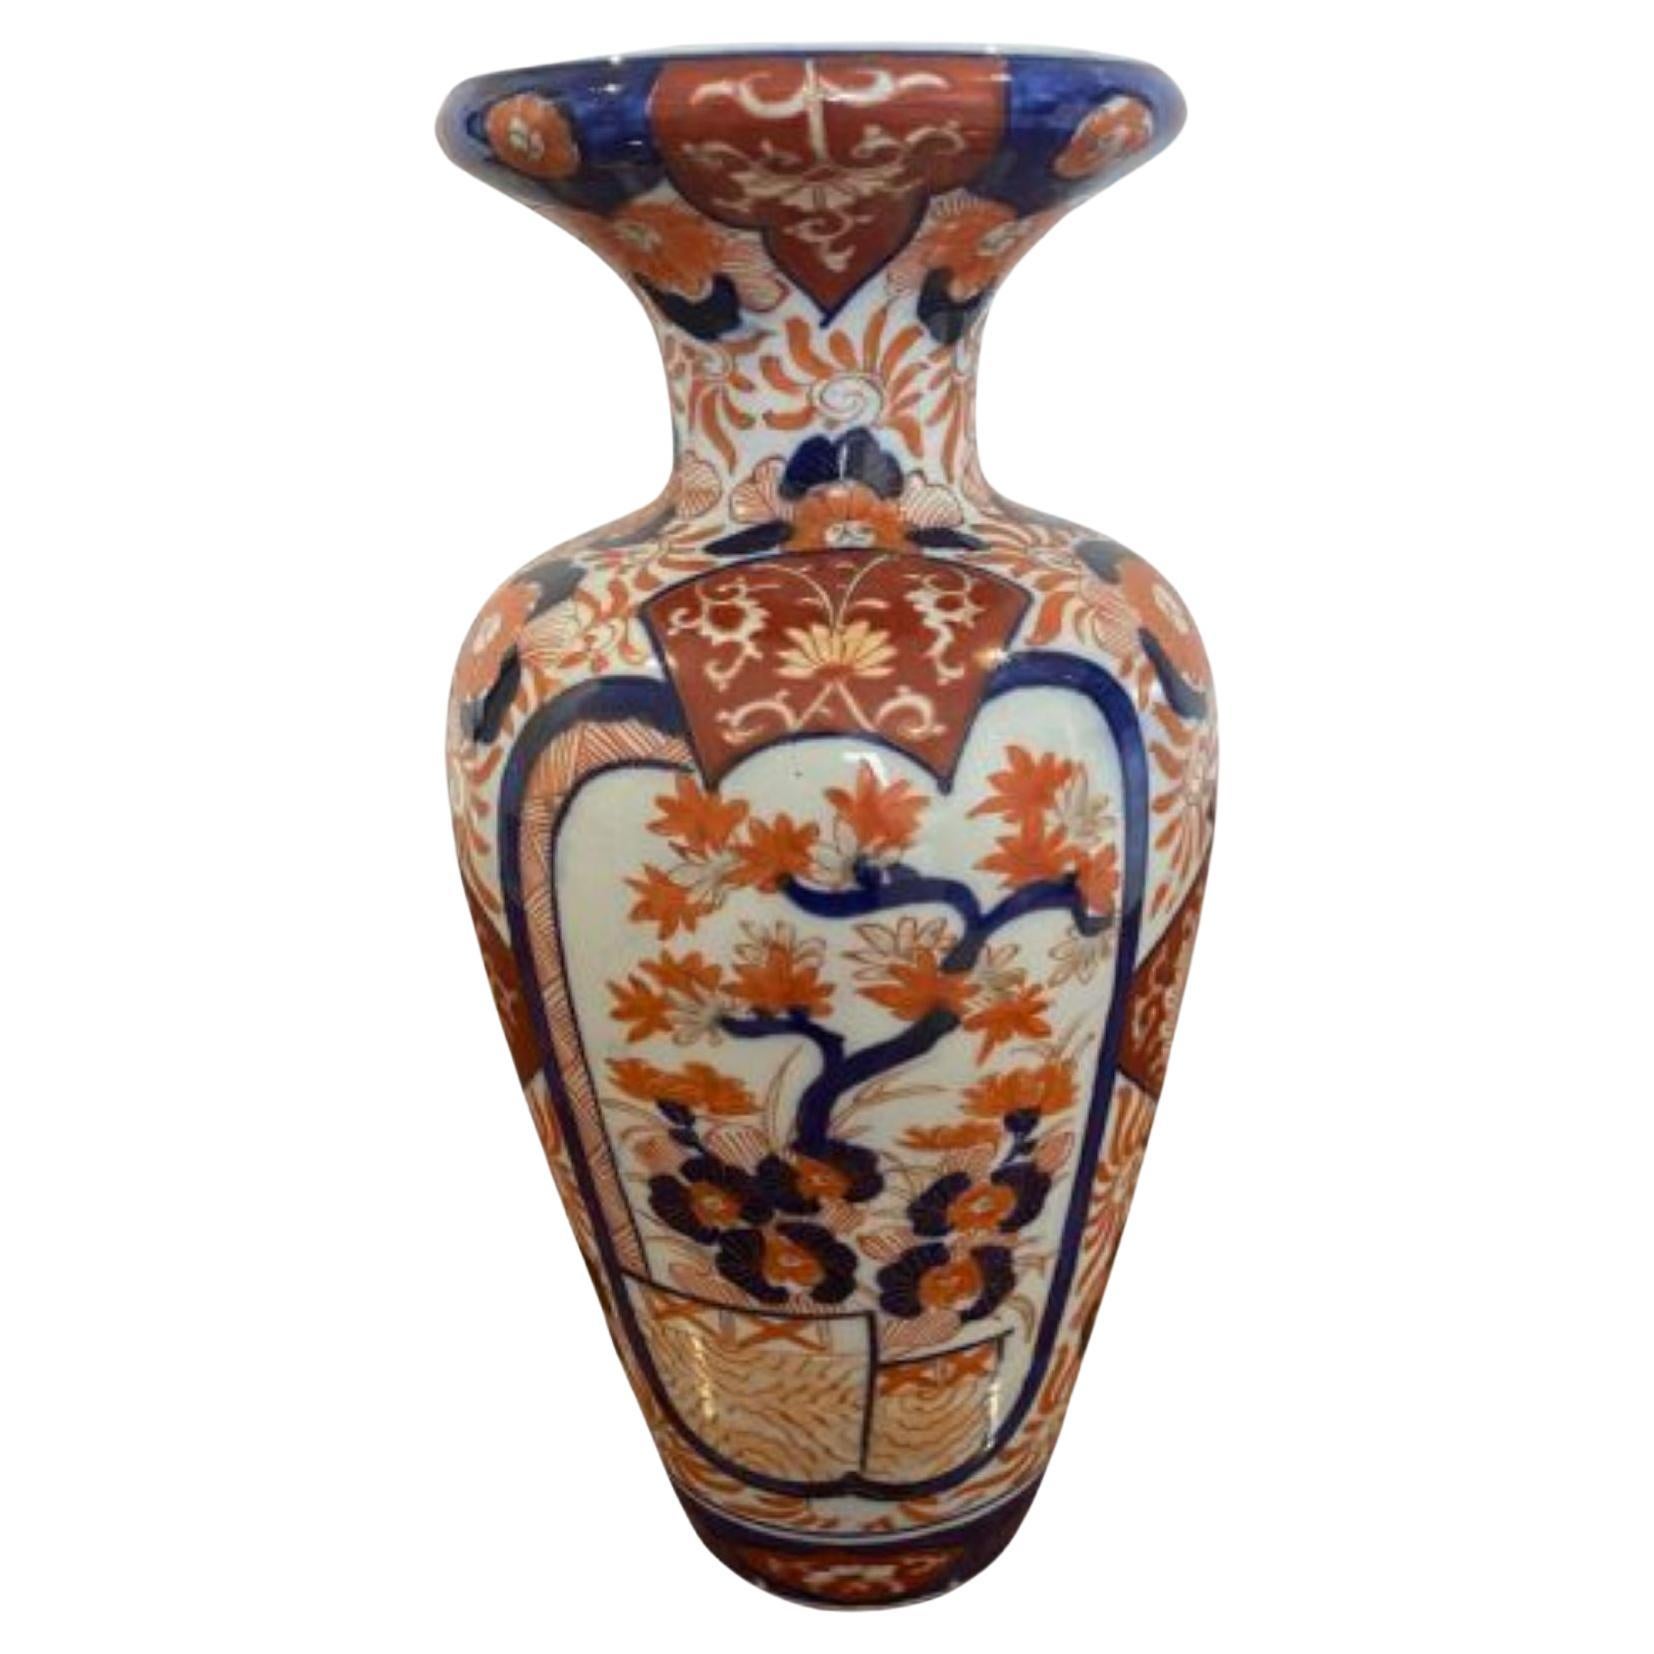 Antike Imari-Vase in japanischer Qualität